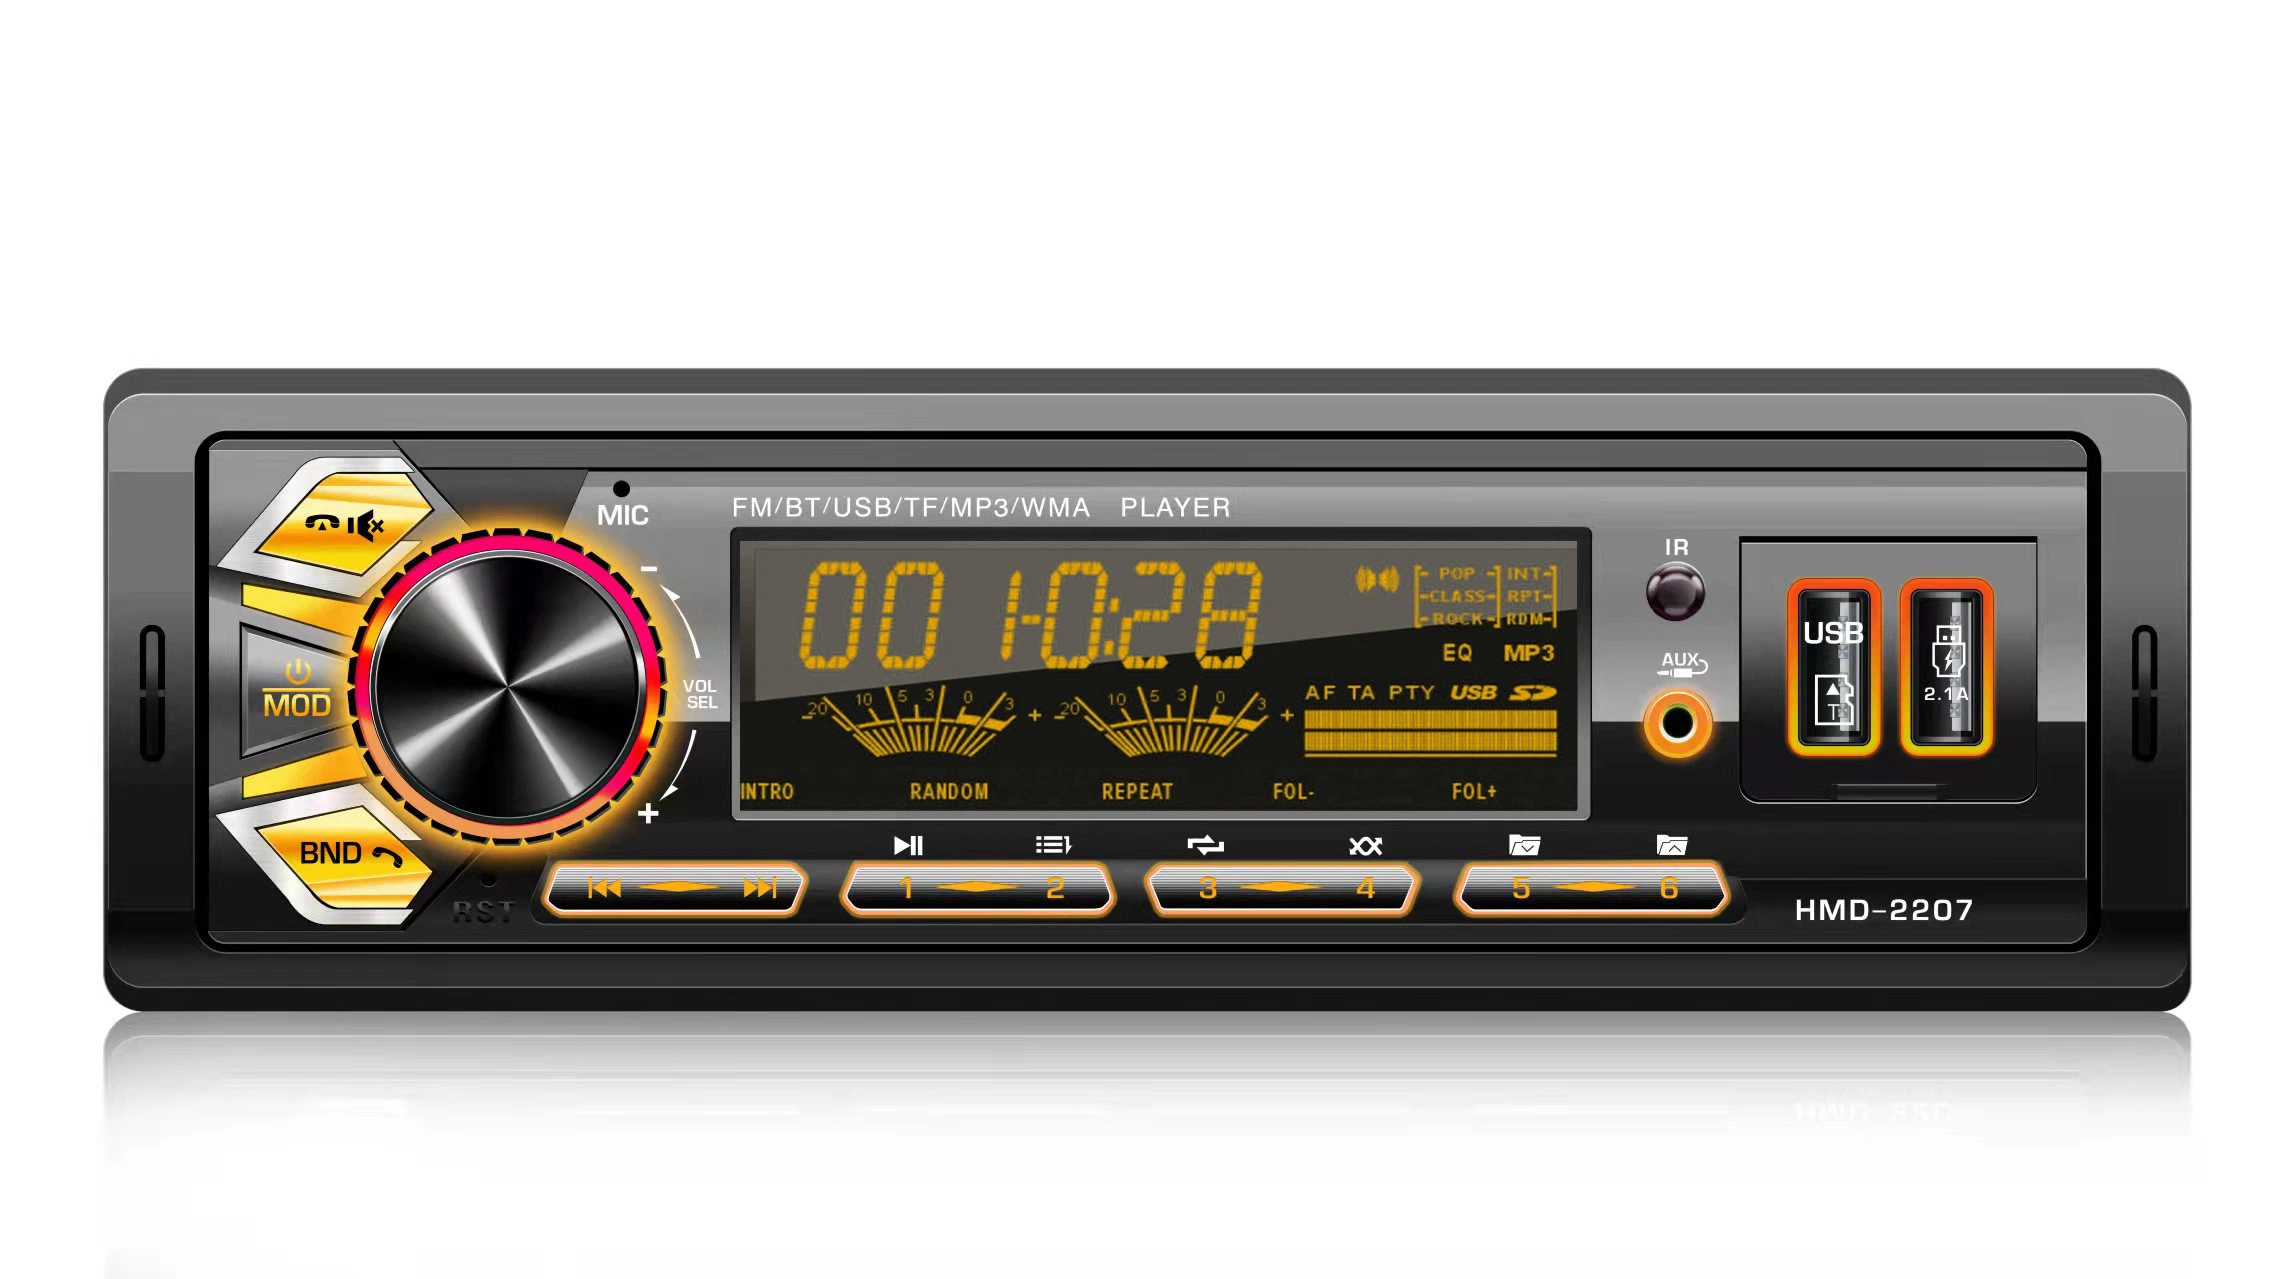 1DIN Car Audio Voice Assistant Aux USB SD/TF Bluetooth FM Radio MP3 Player